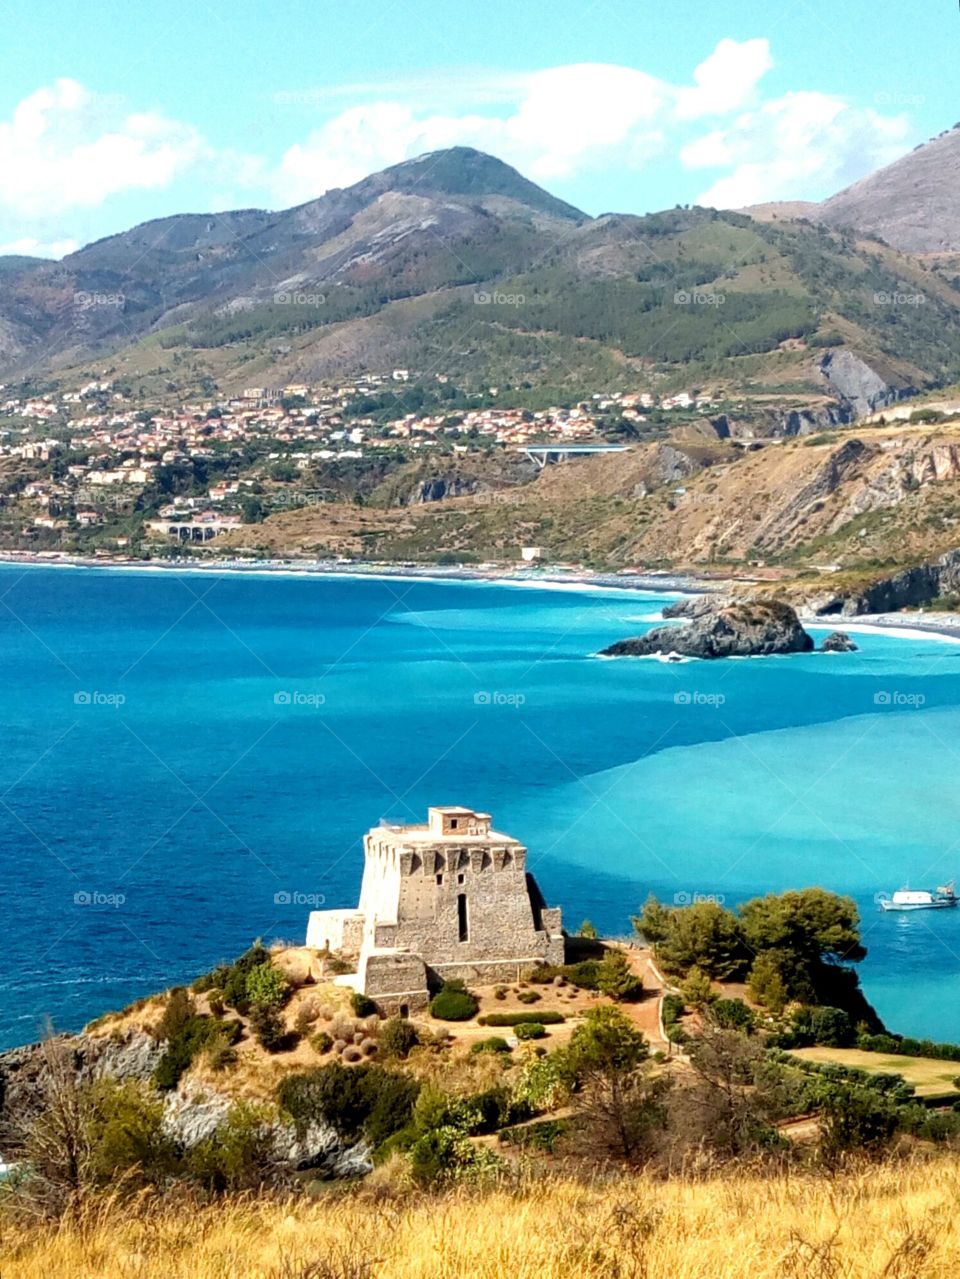 In coastline of Calabria, italian region